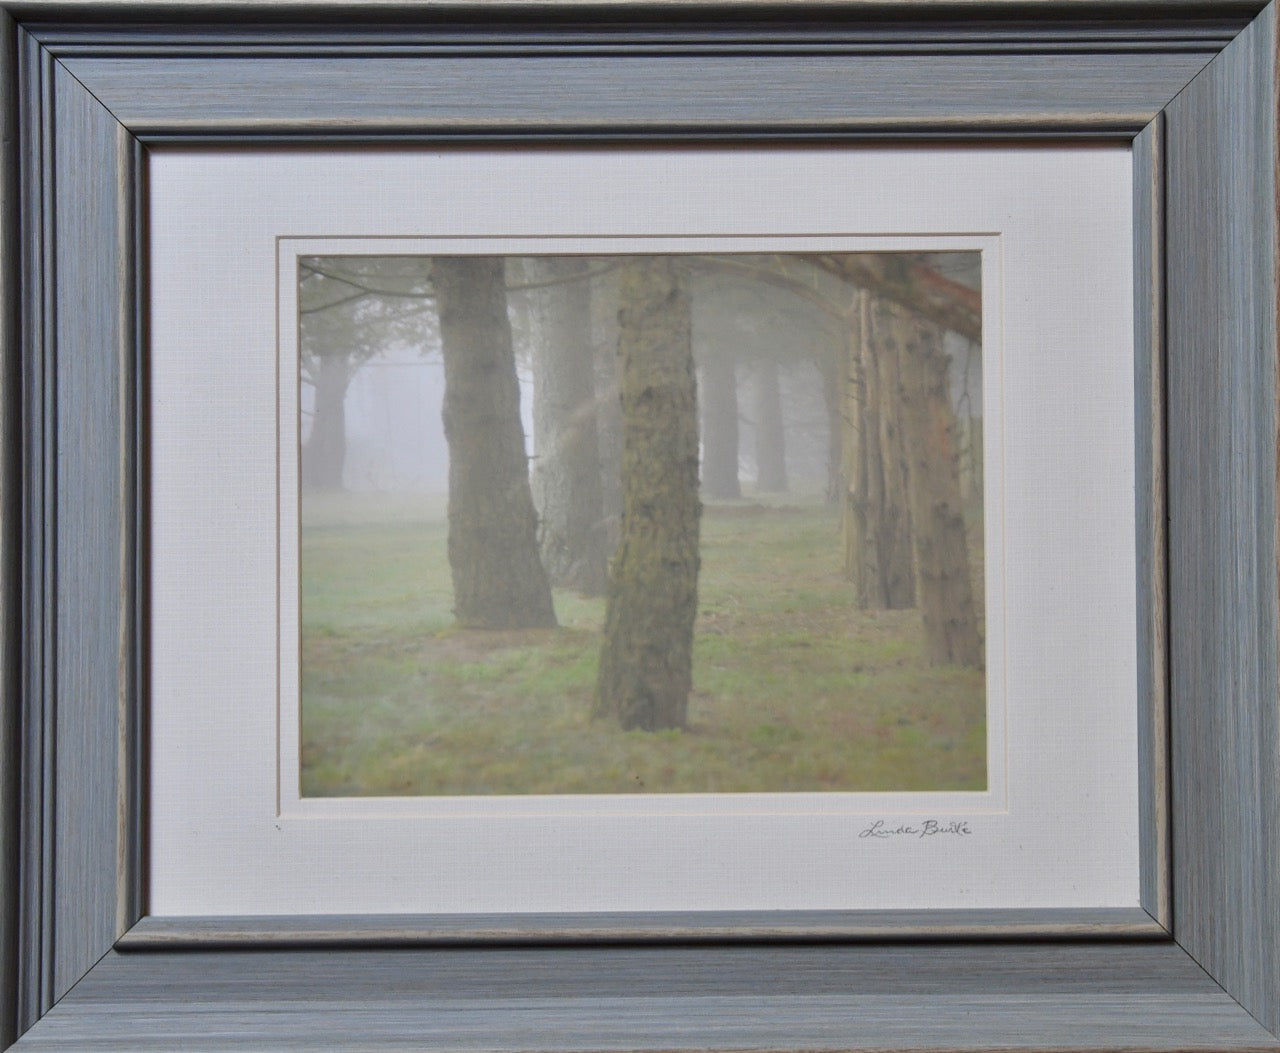 Foggy Morning 8 X 10 Fine Art Photo in a 11 X 14  Frame by Linda Burke